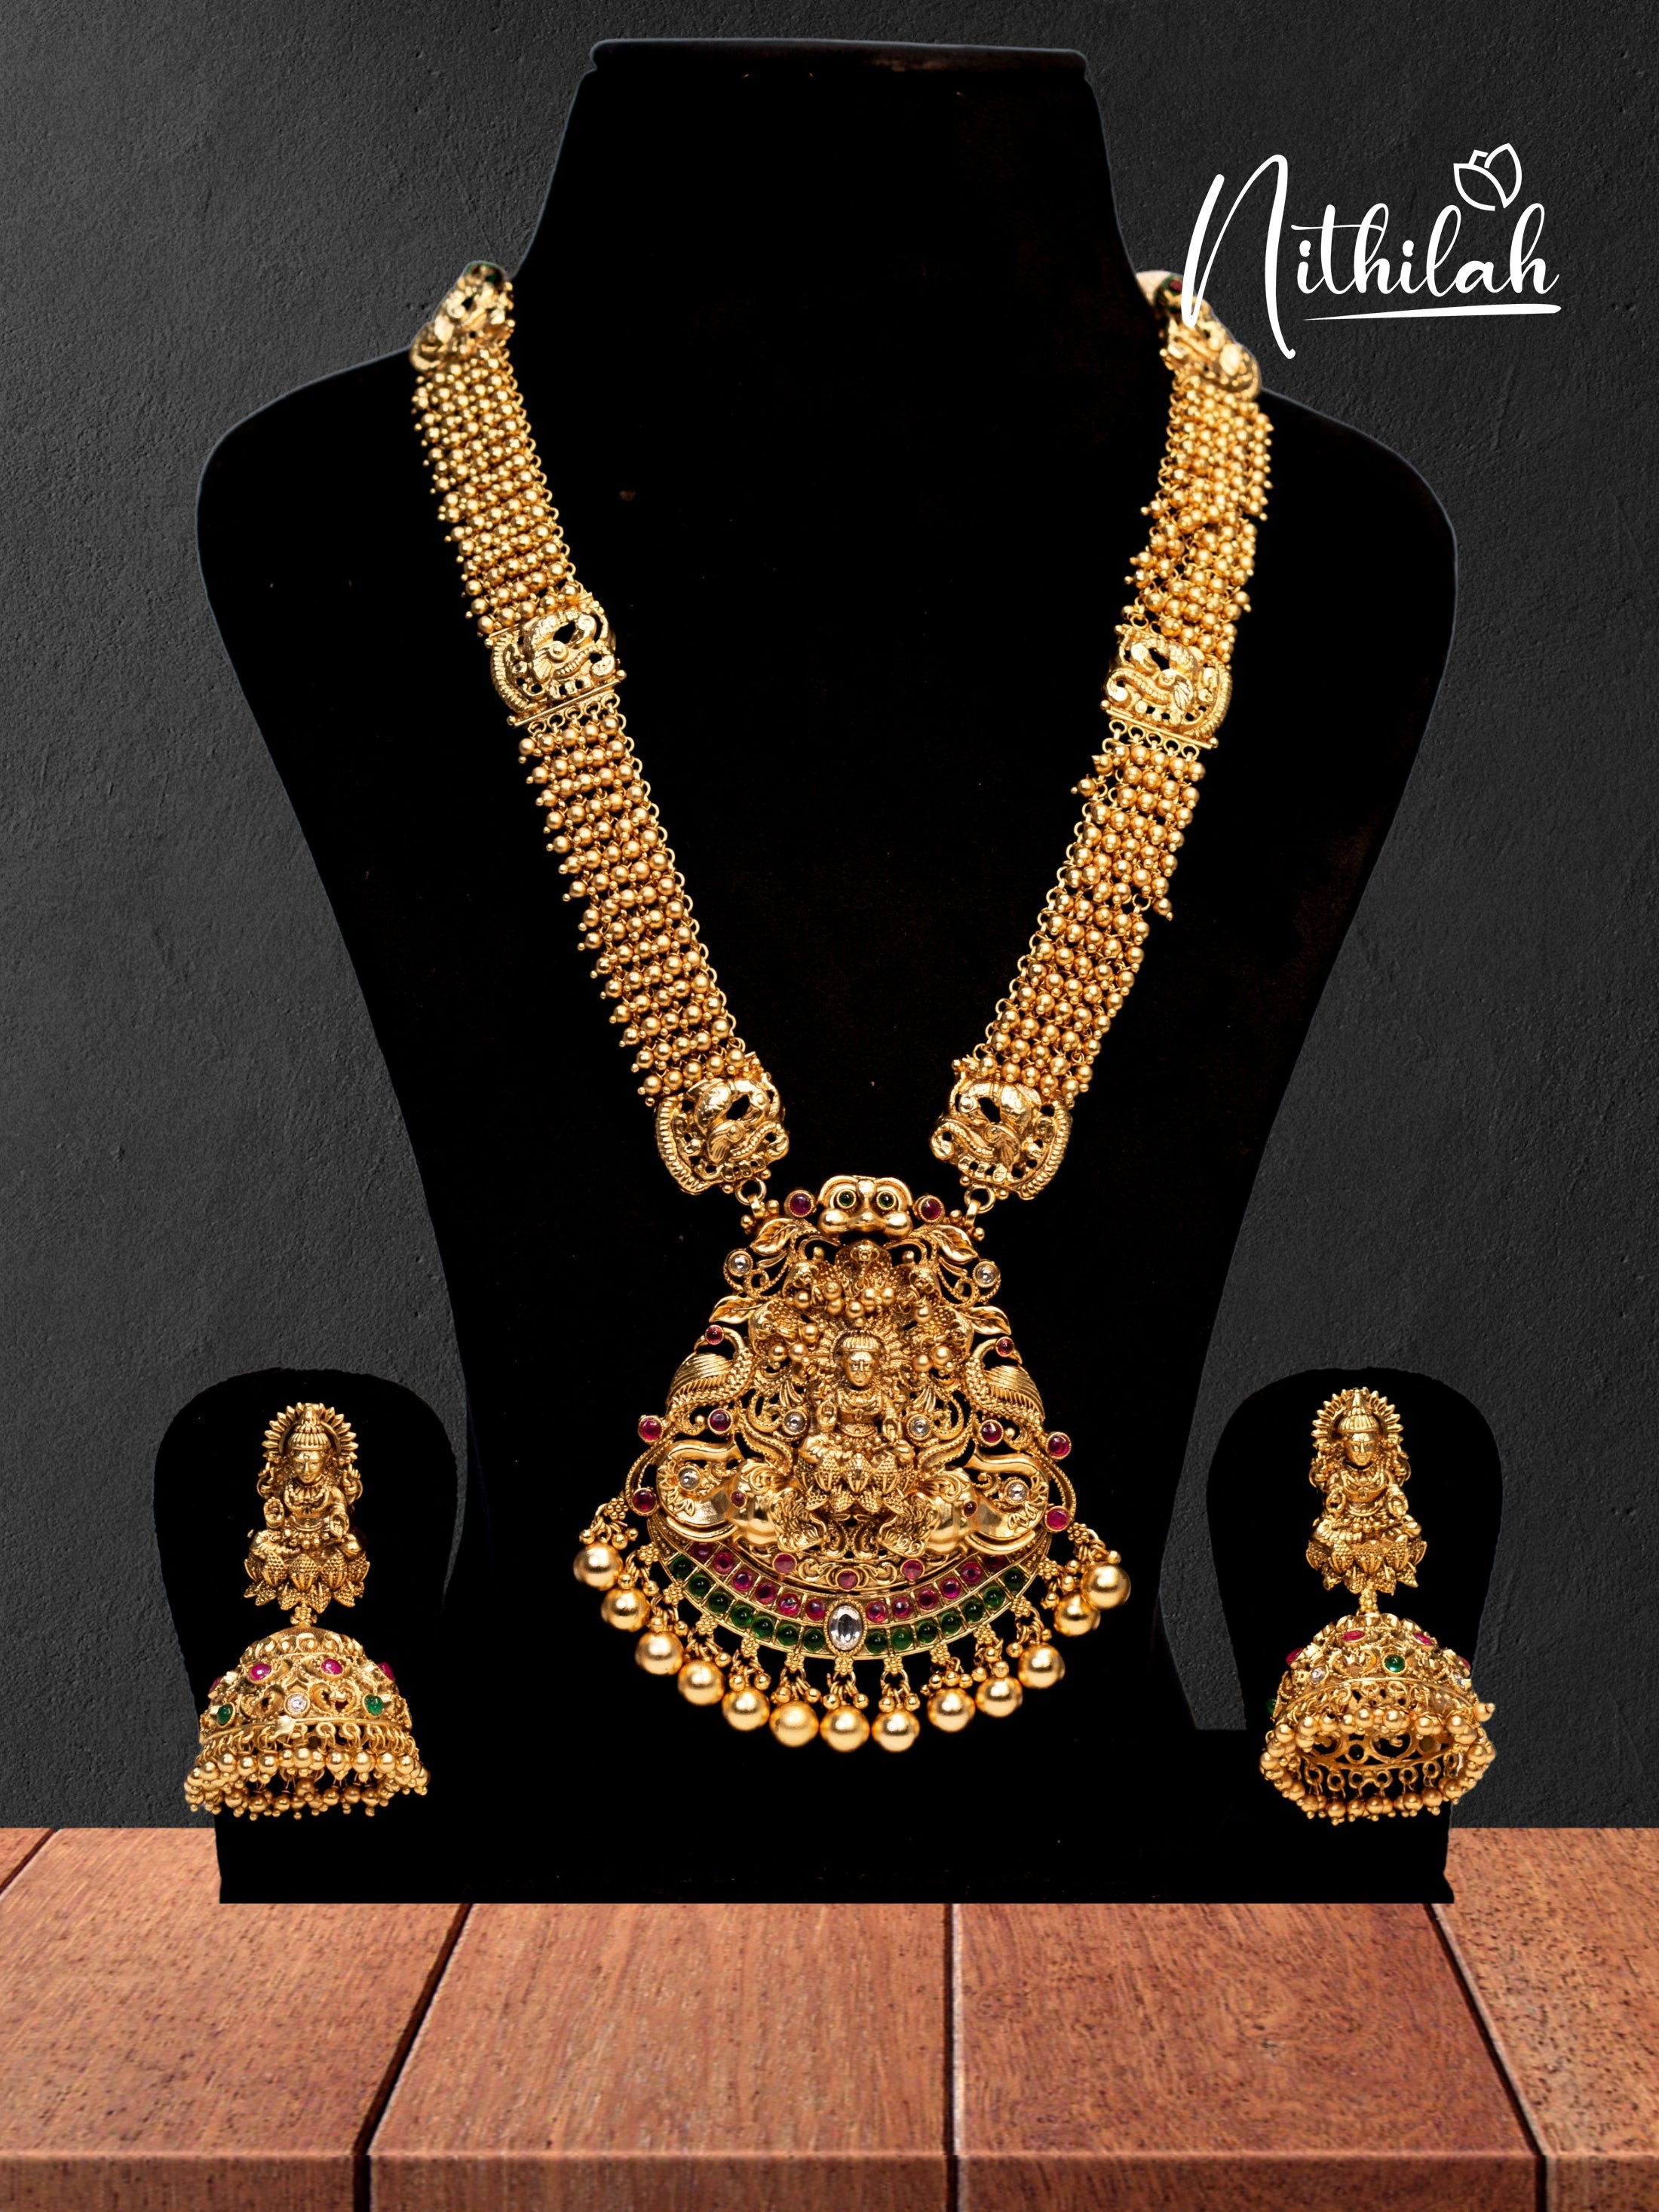 Buy Imitation Jewellery Gold Balls Peacock Lakshmi Haram NAFH112 Online